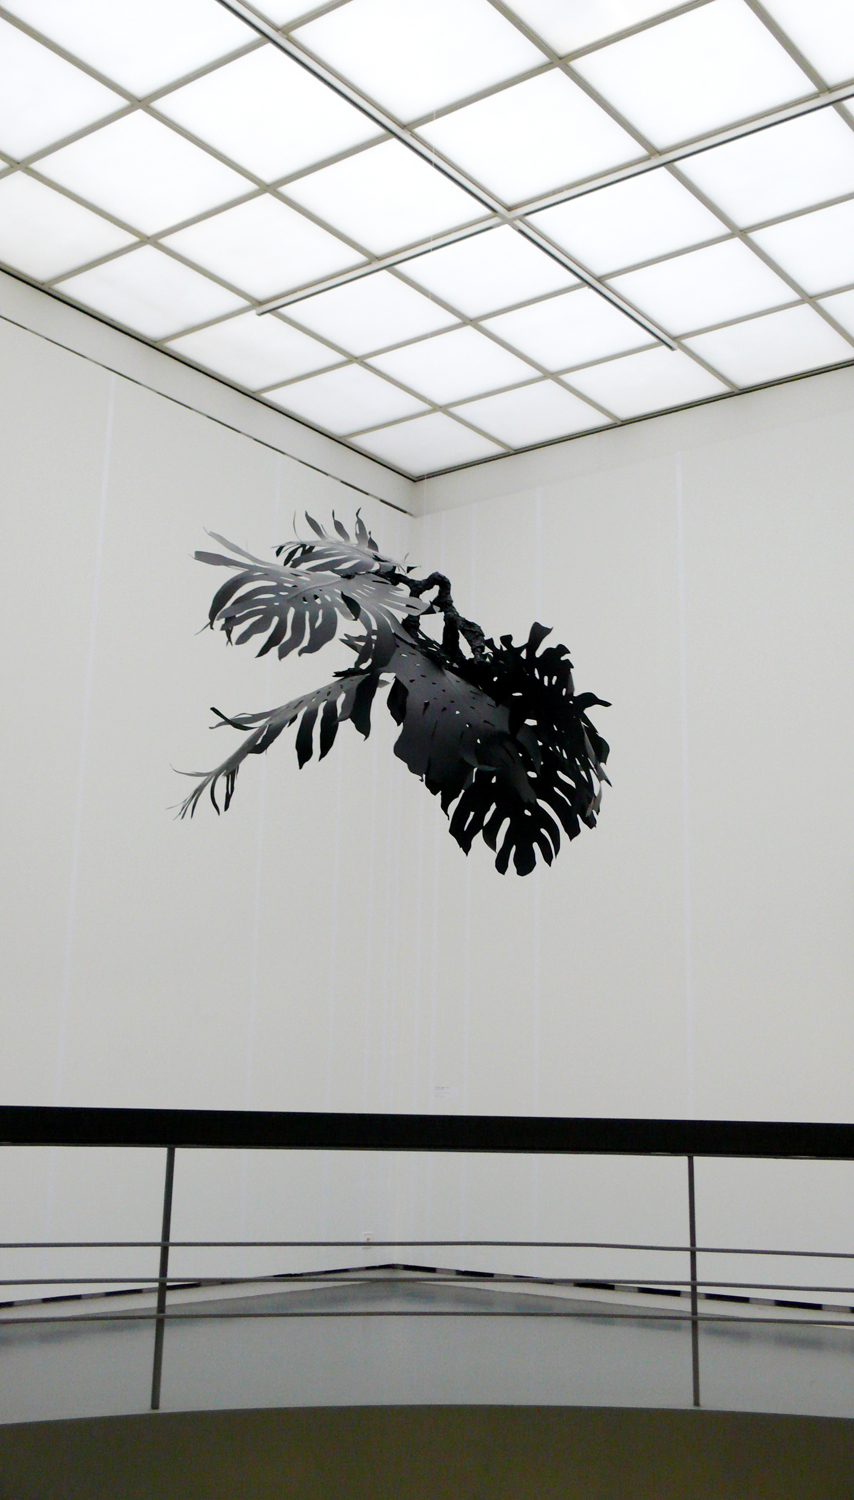   Monstera , 2011 metal, paper, glue, nylon Installation at  Voici un dessin suisse, 1990-2010 , Kunsthaus Aarau   